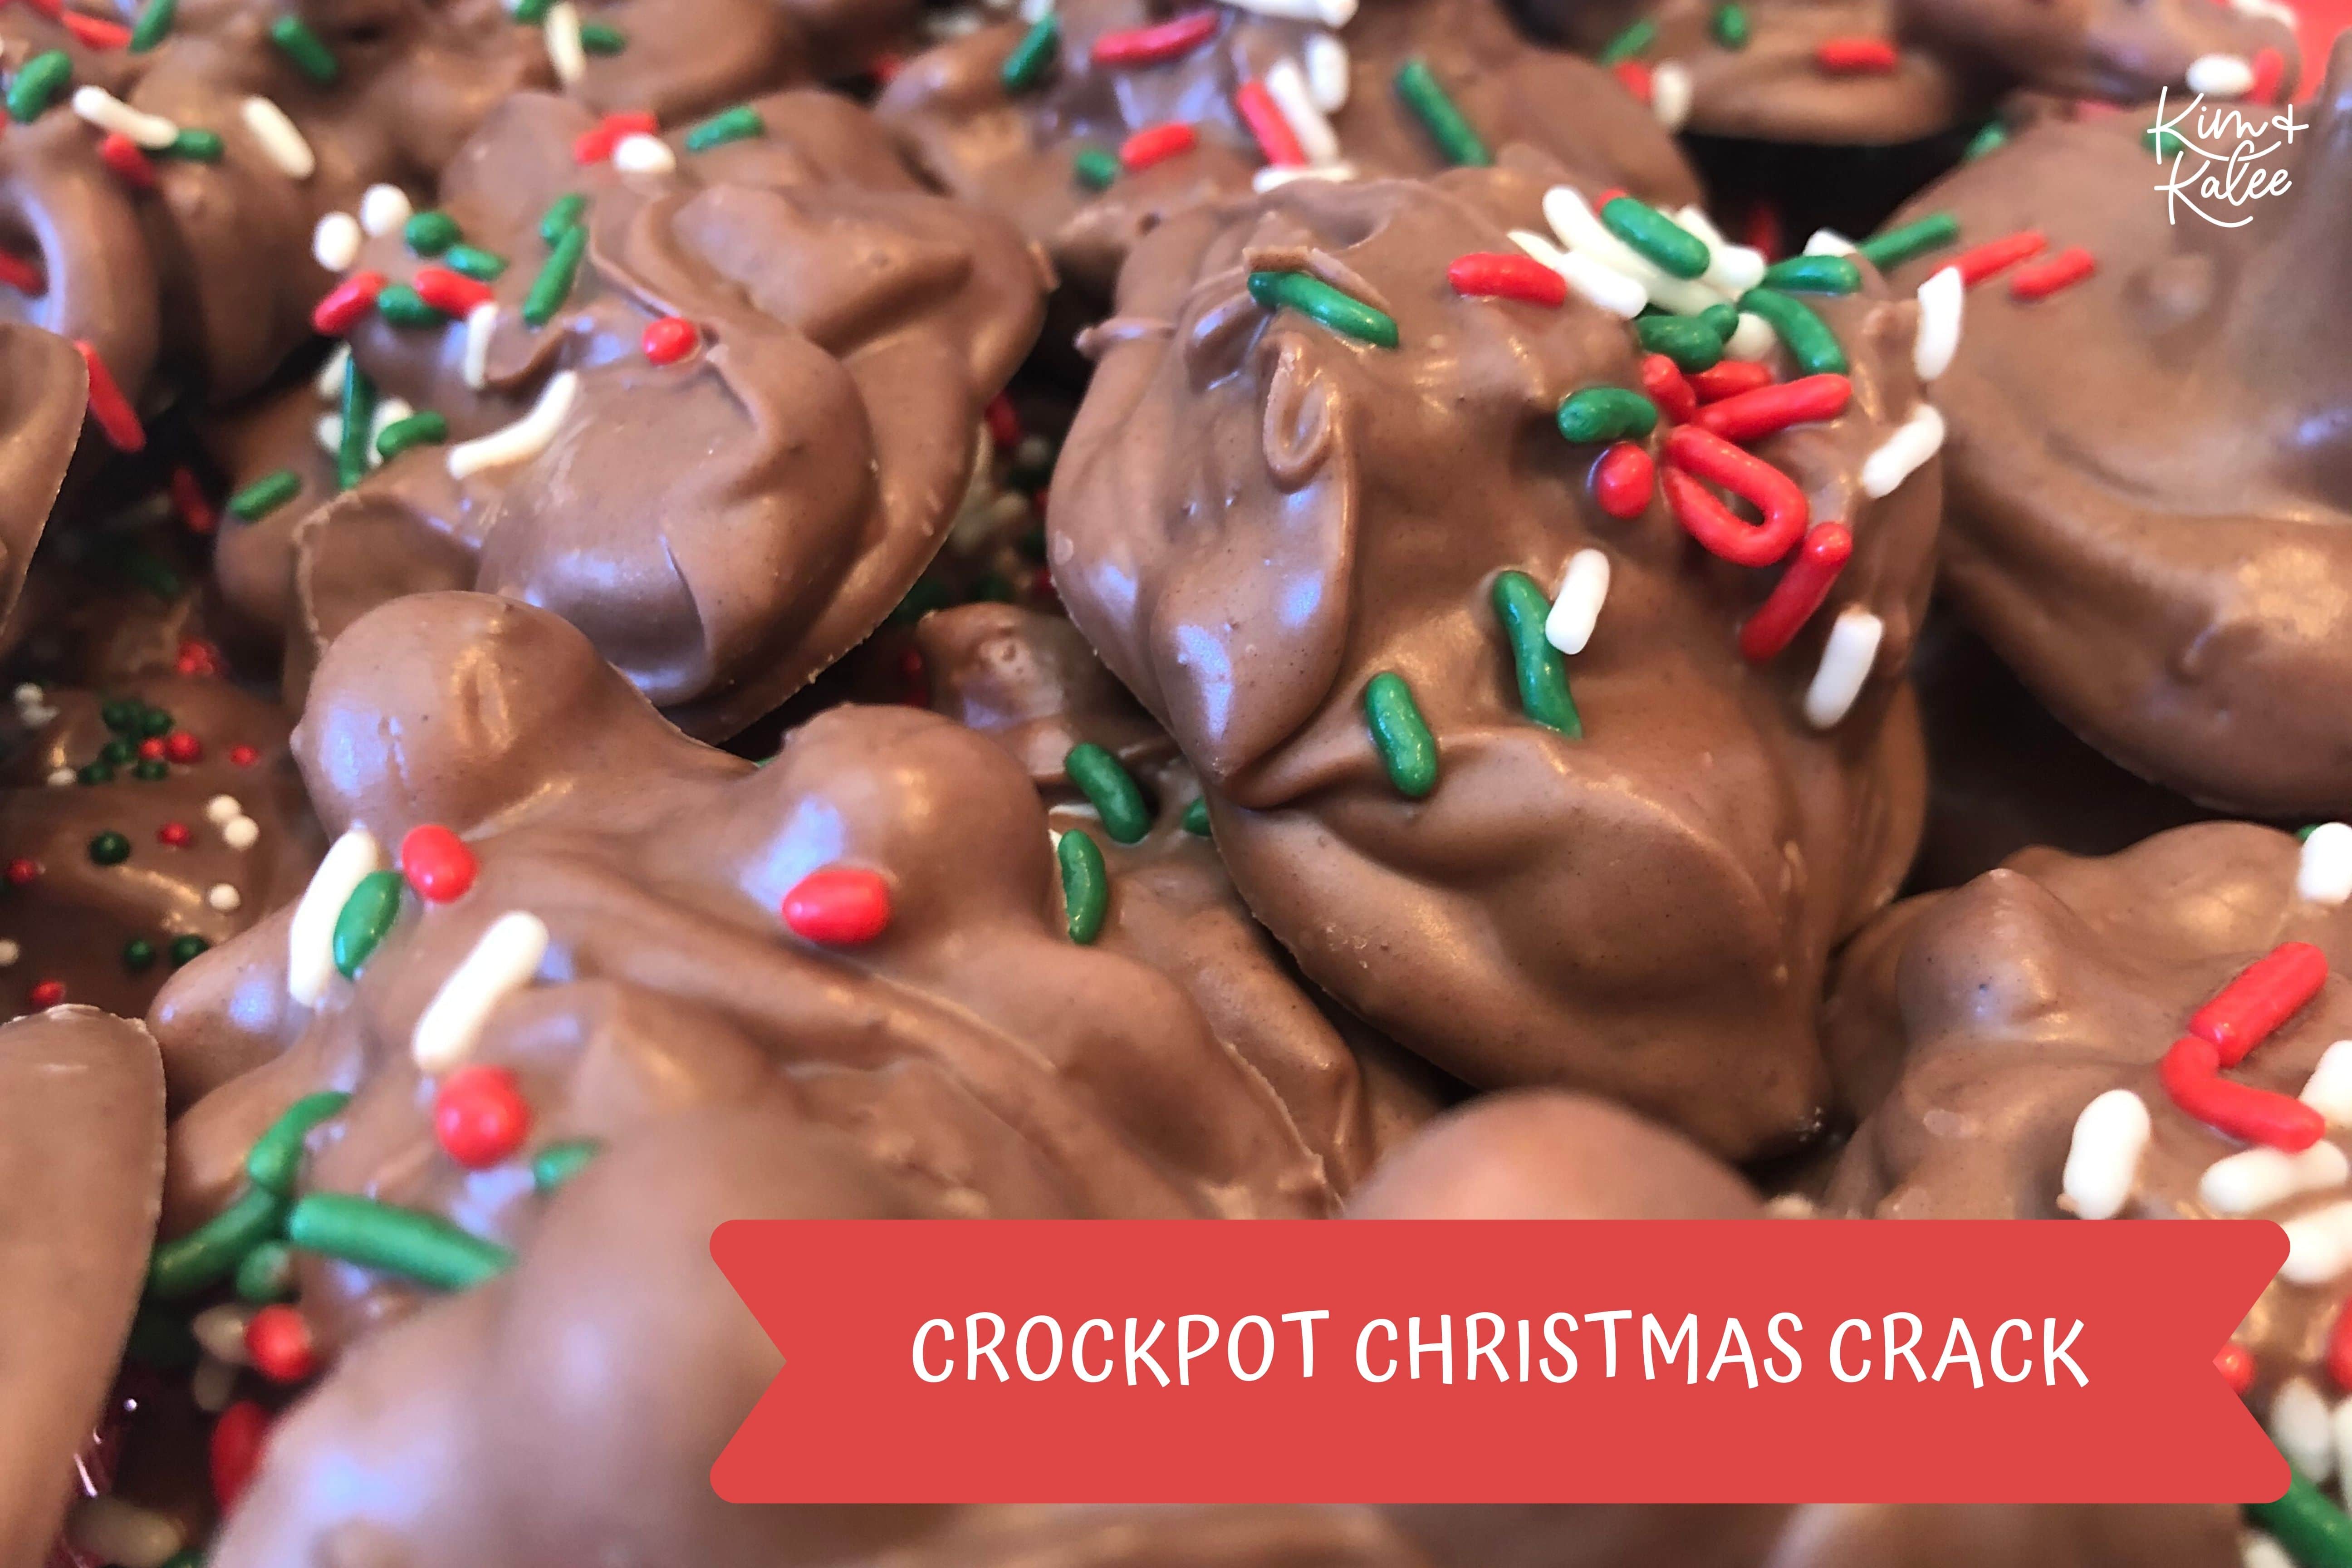 Crockpot Christmas Crack up close labeled-min 